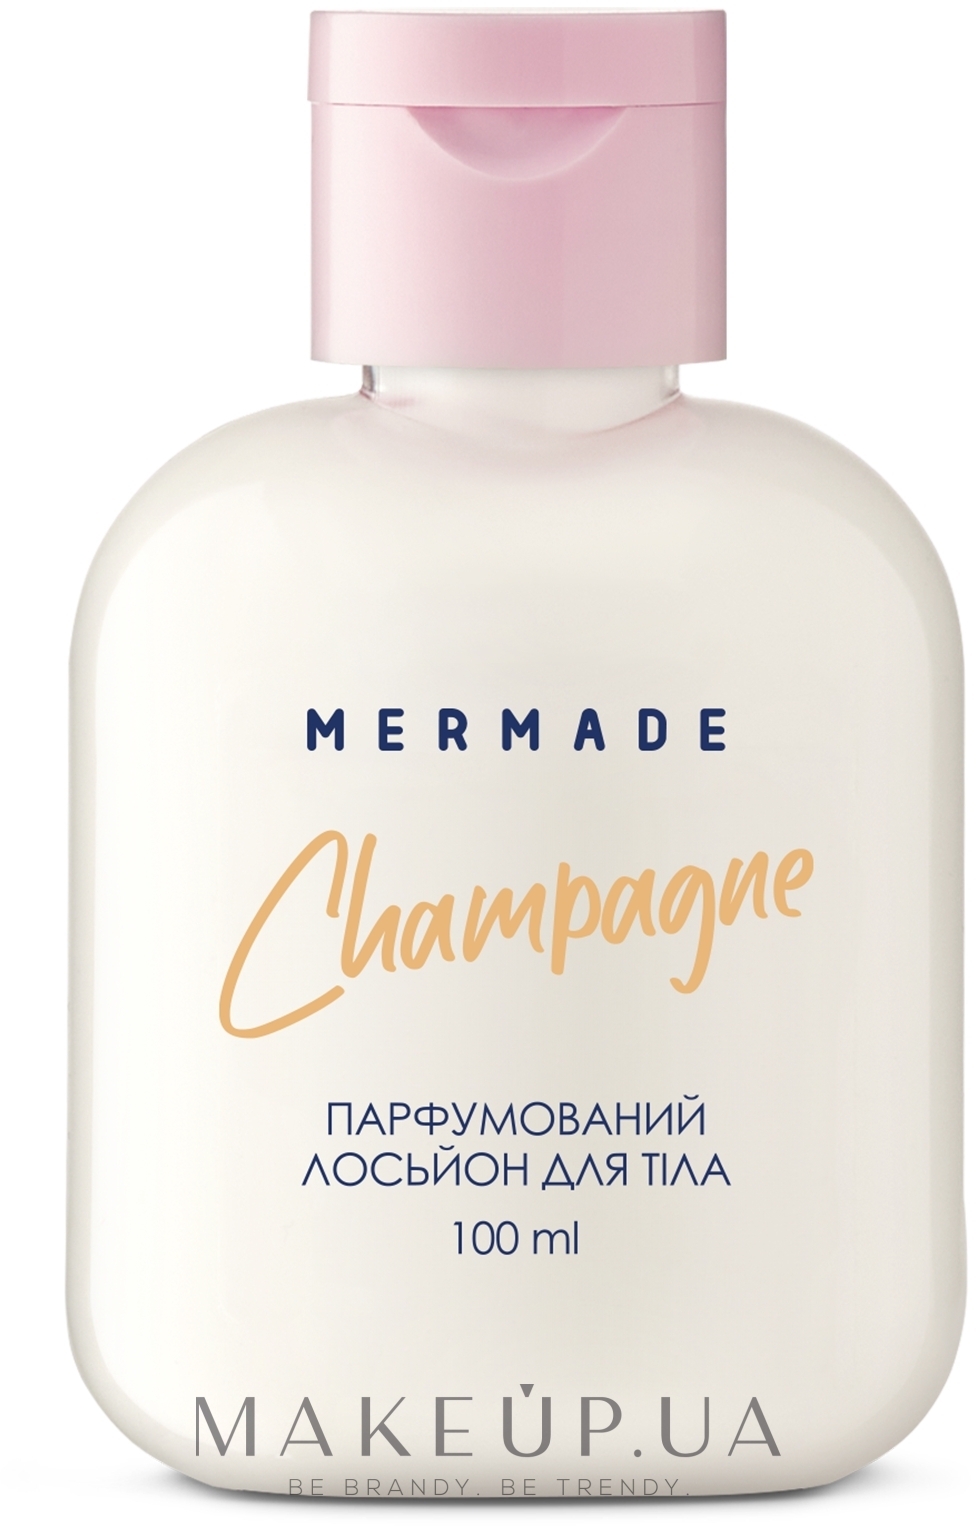 Mermade Champagne - Парфюмированный лосьон для тела — фото 100ml